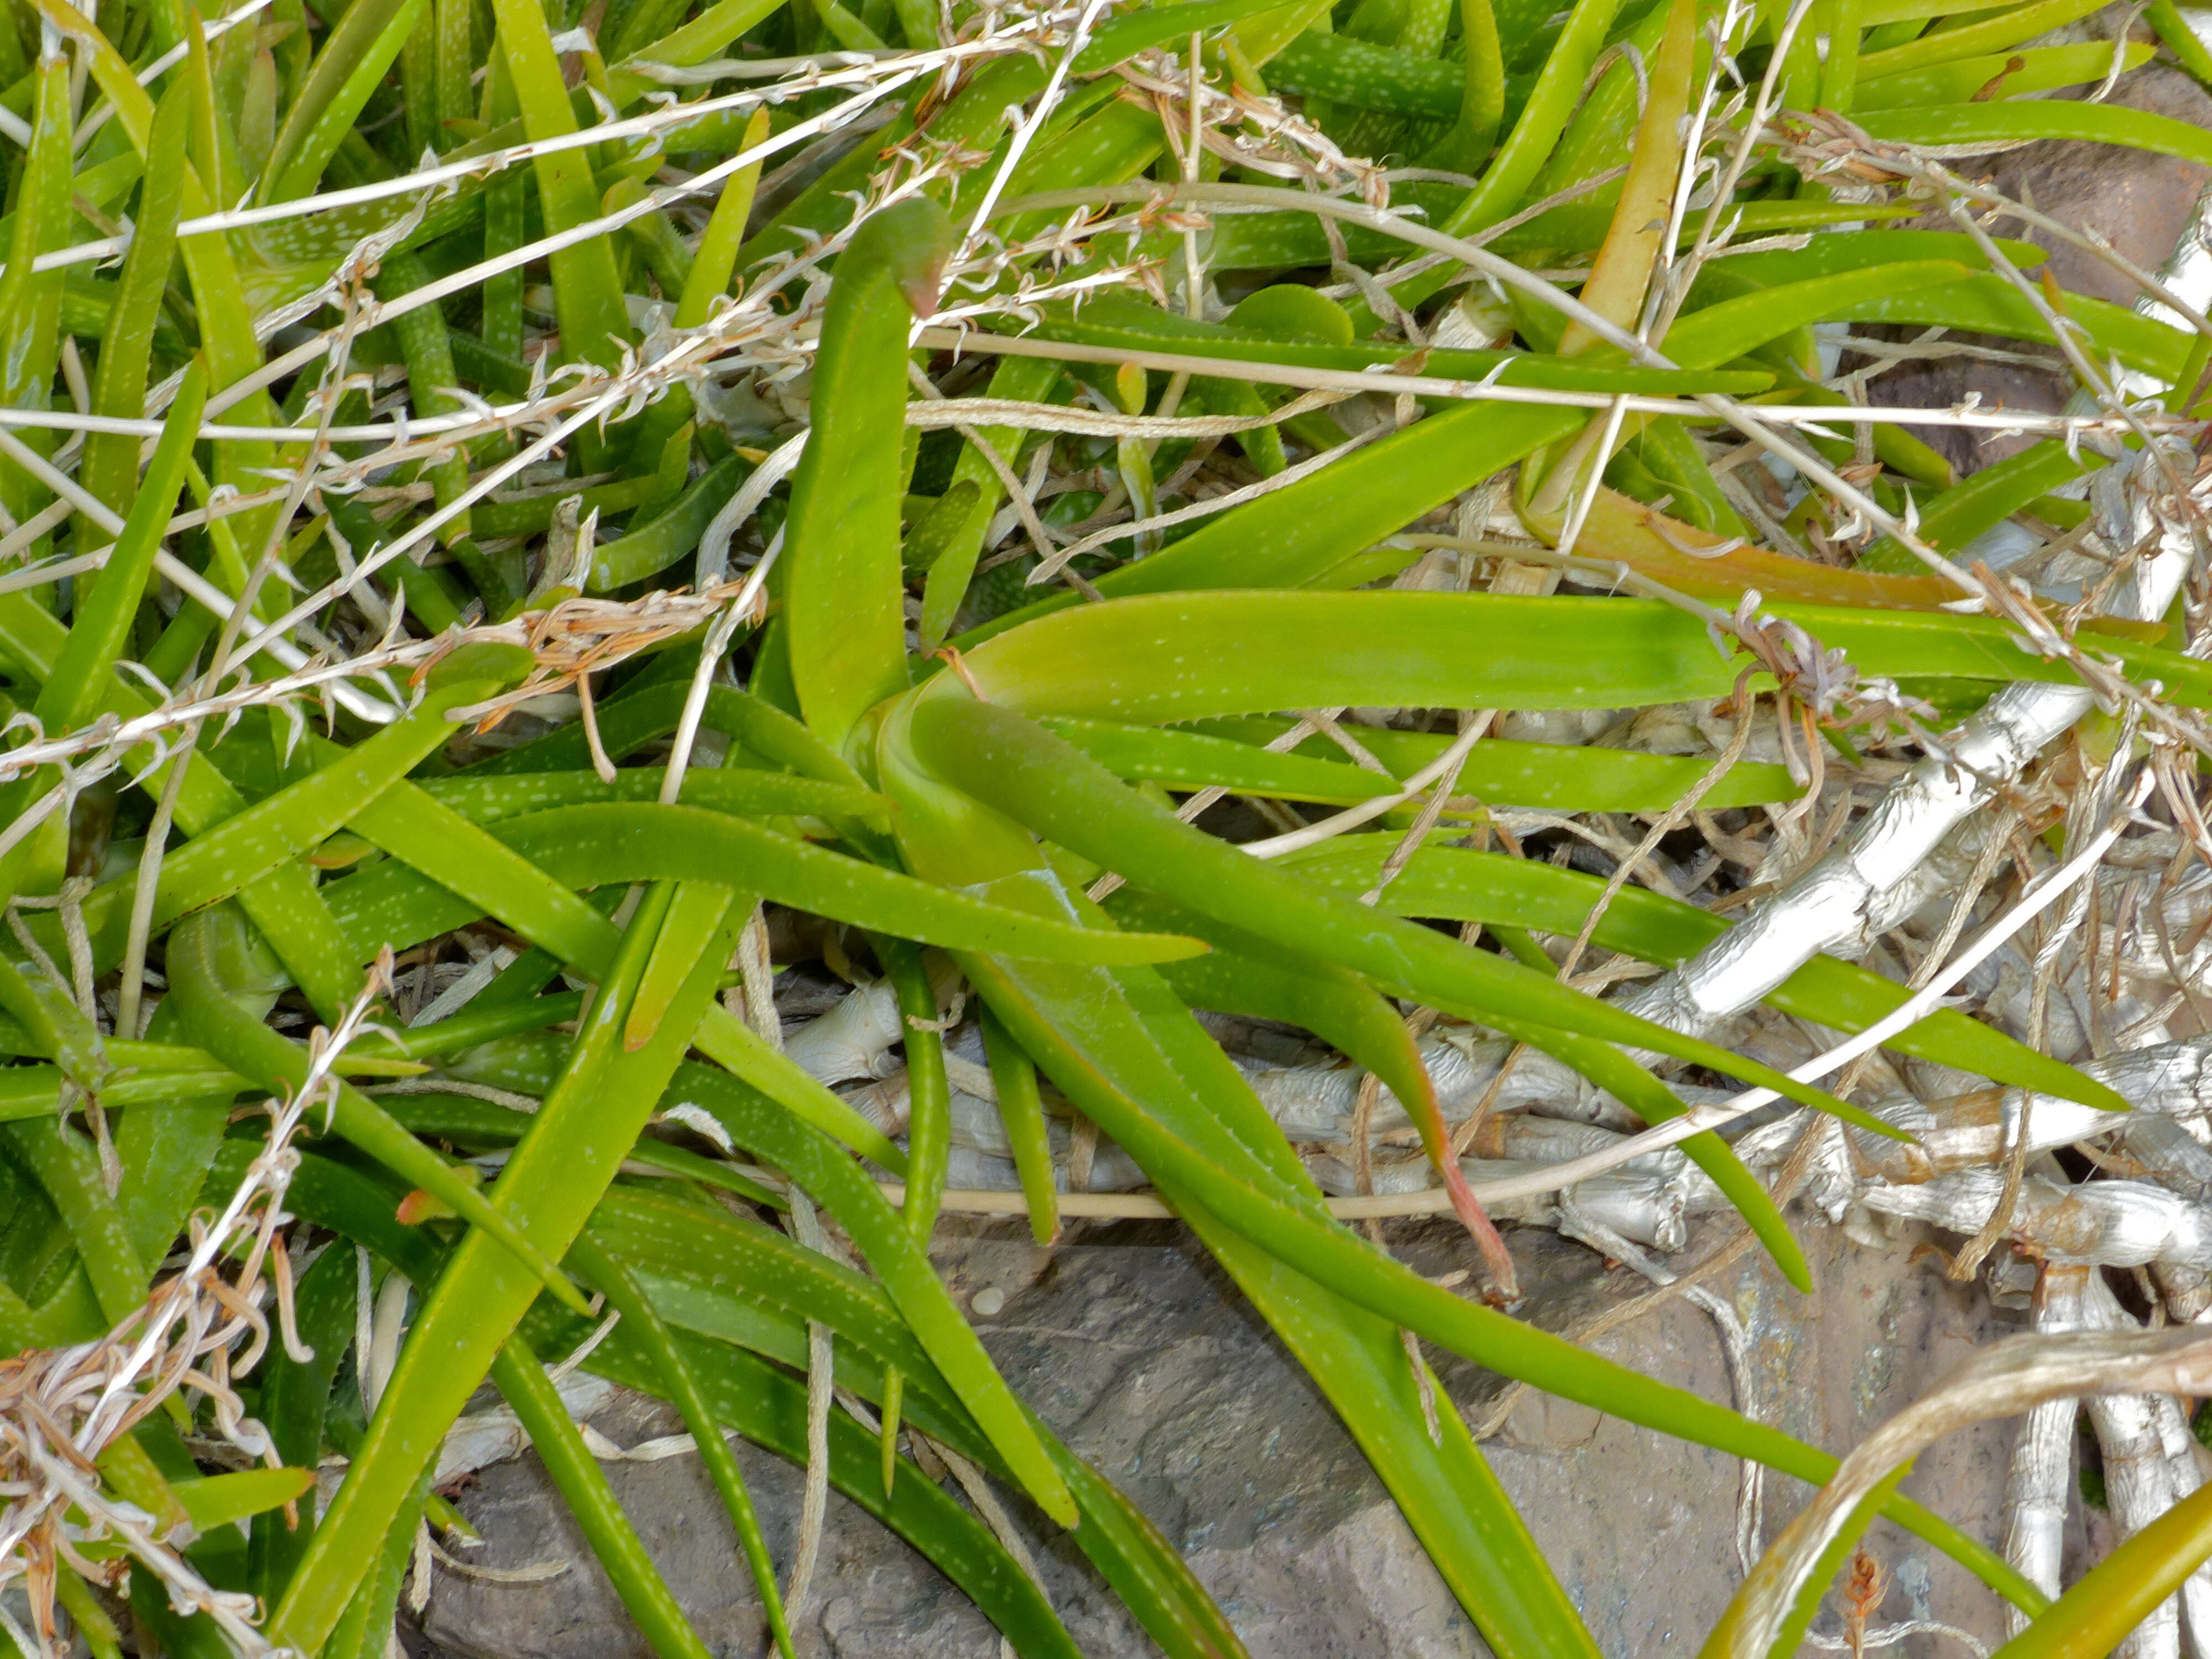 Image of Aloe pendens Forssk.